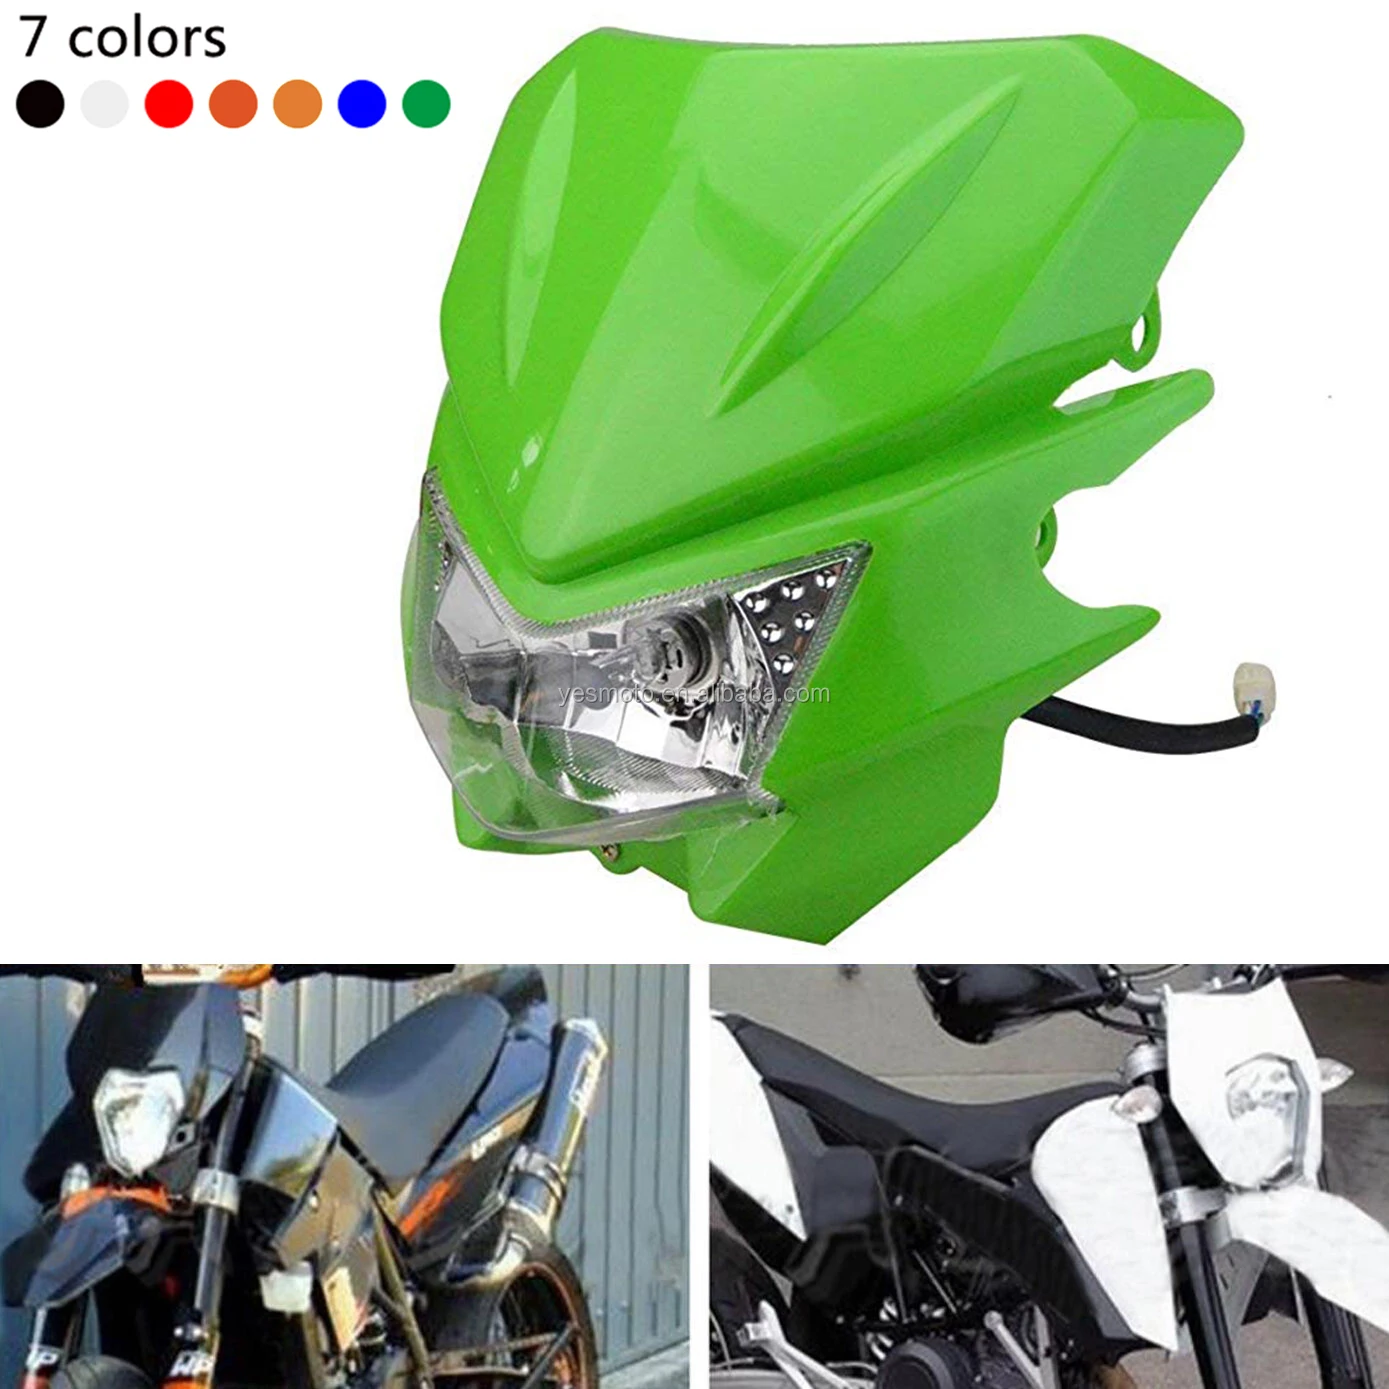 GOOFIT Motorcycle Dirt Bike Universal Headlights Fairing Light Headlamp for KX125 KX250 KXF250 KXF450 KLX200 KLX250 KLX450 Green 